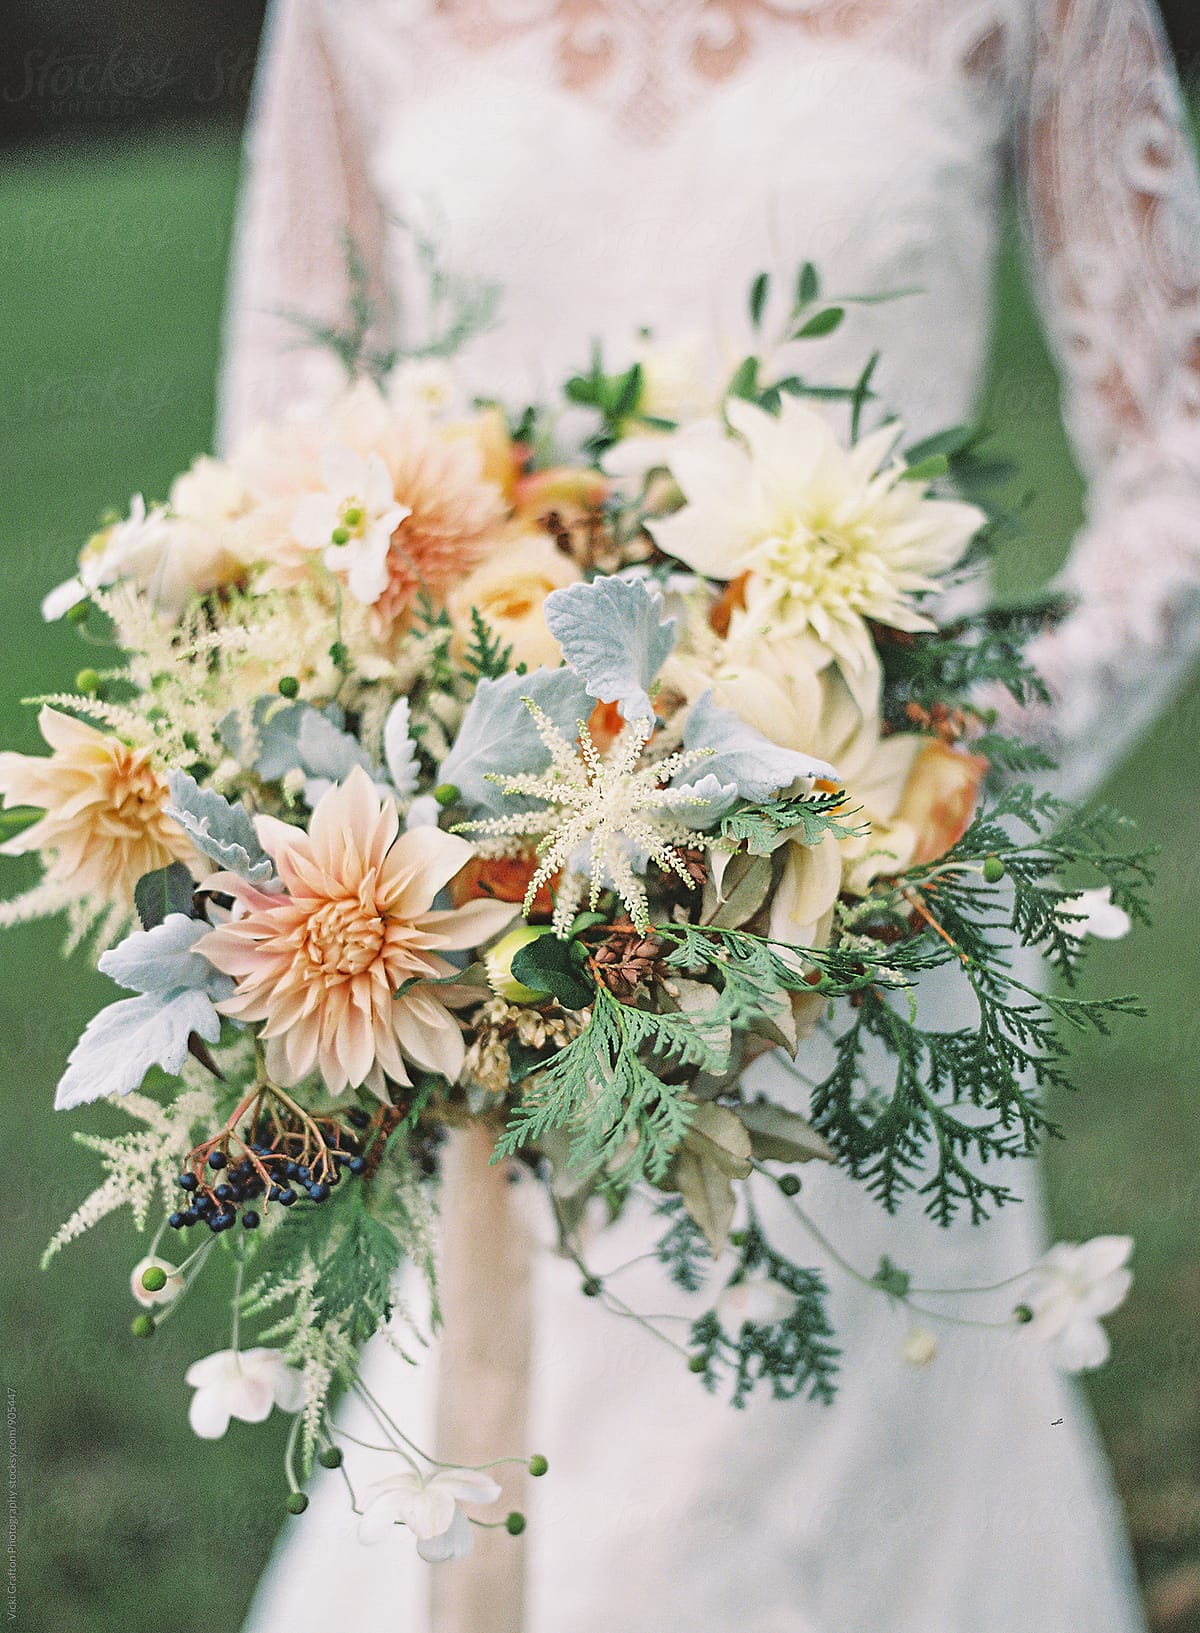 Bride with her wedding bouquet